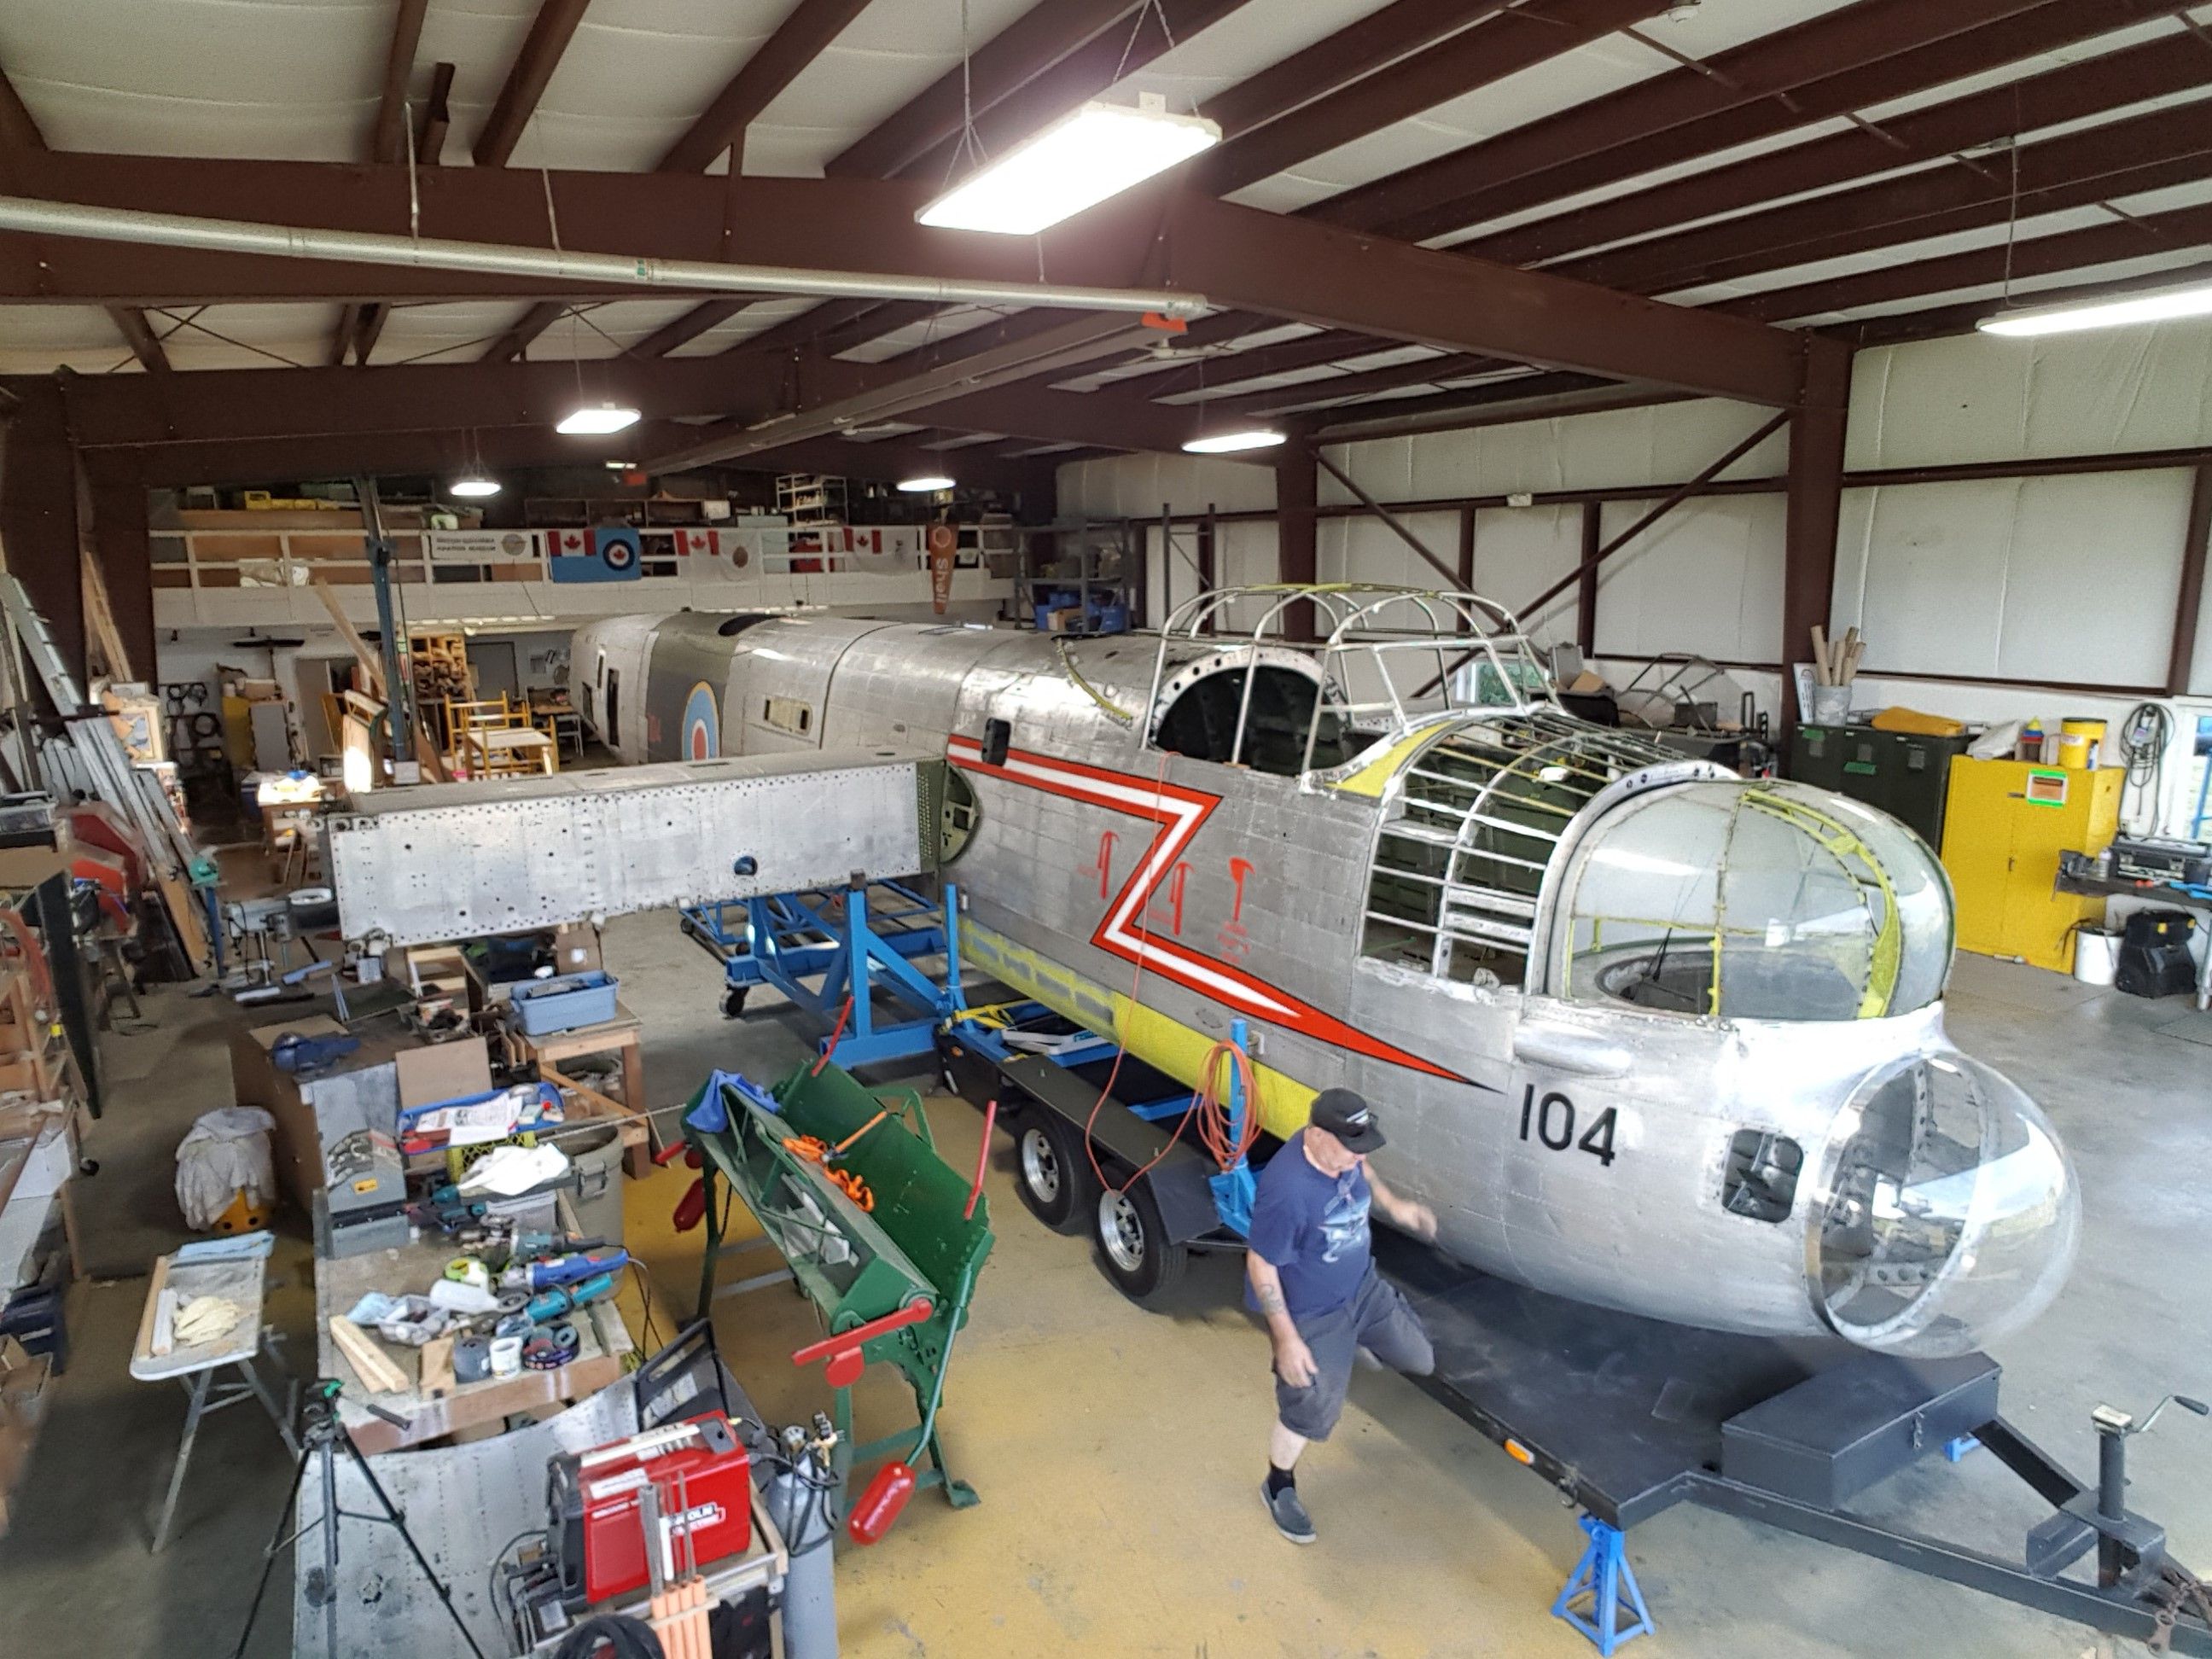 B.C. Aviation Museum makes progress on Lancaster FM104